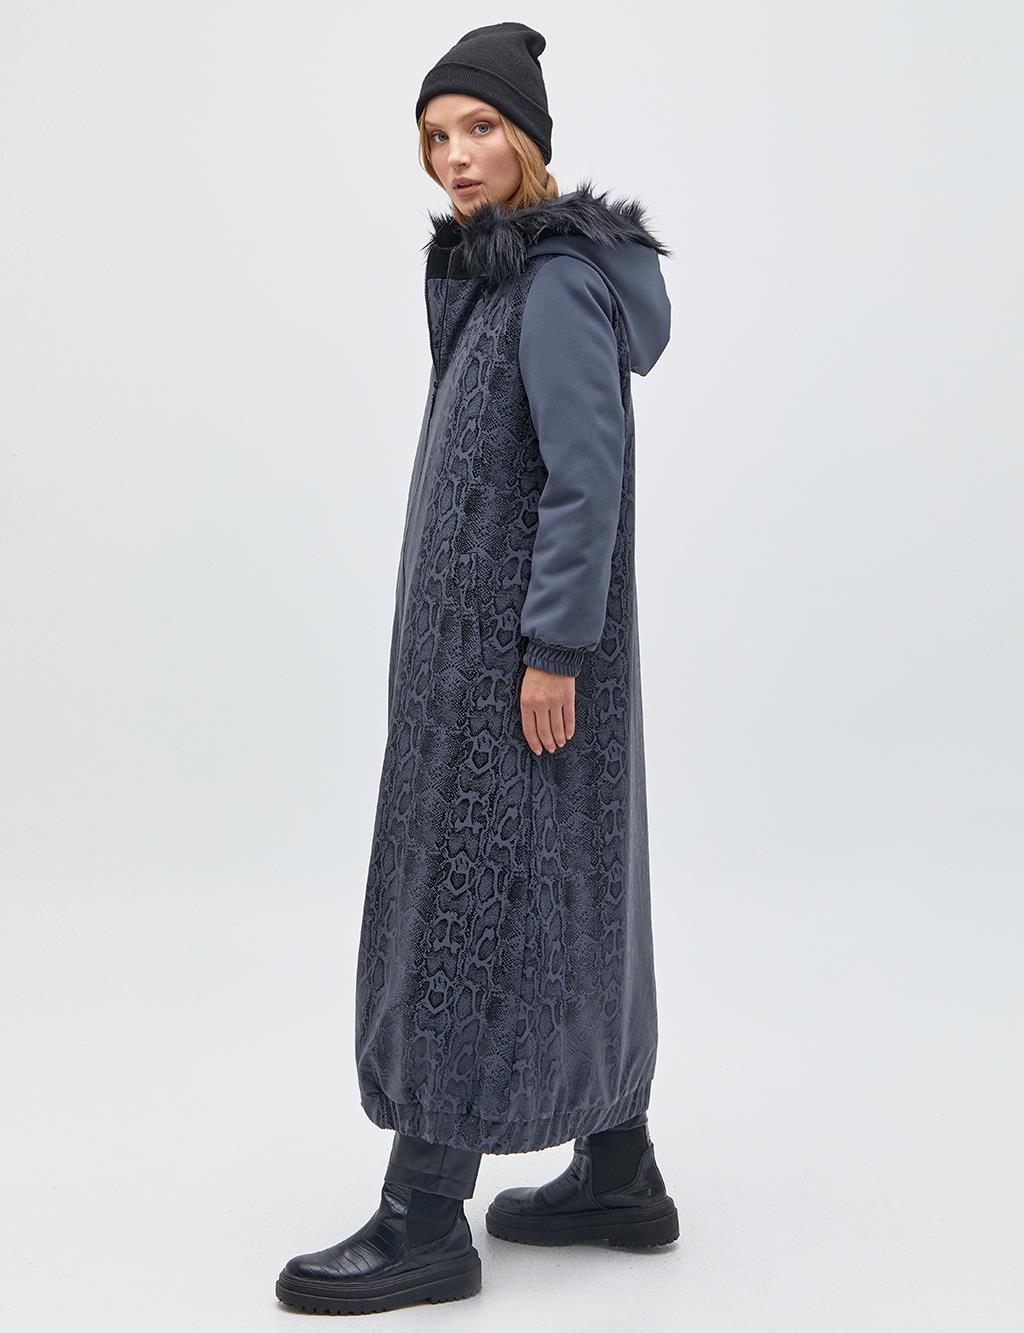 Fur Hooded Animal Print Topcoat Black